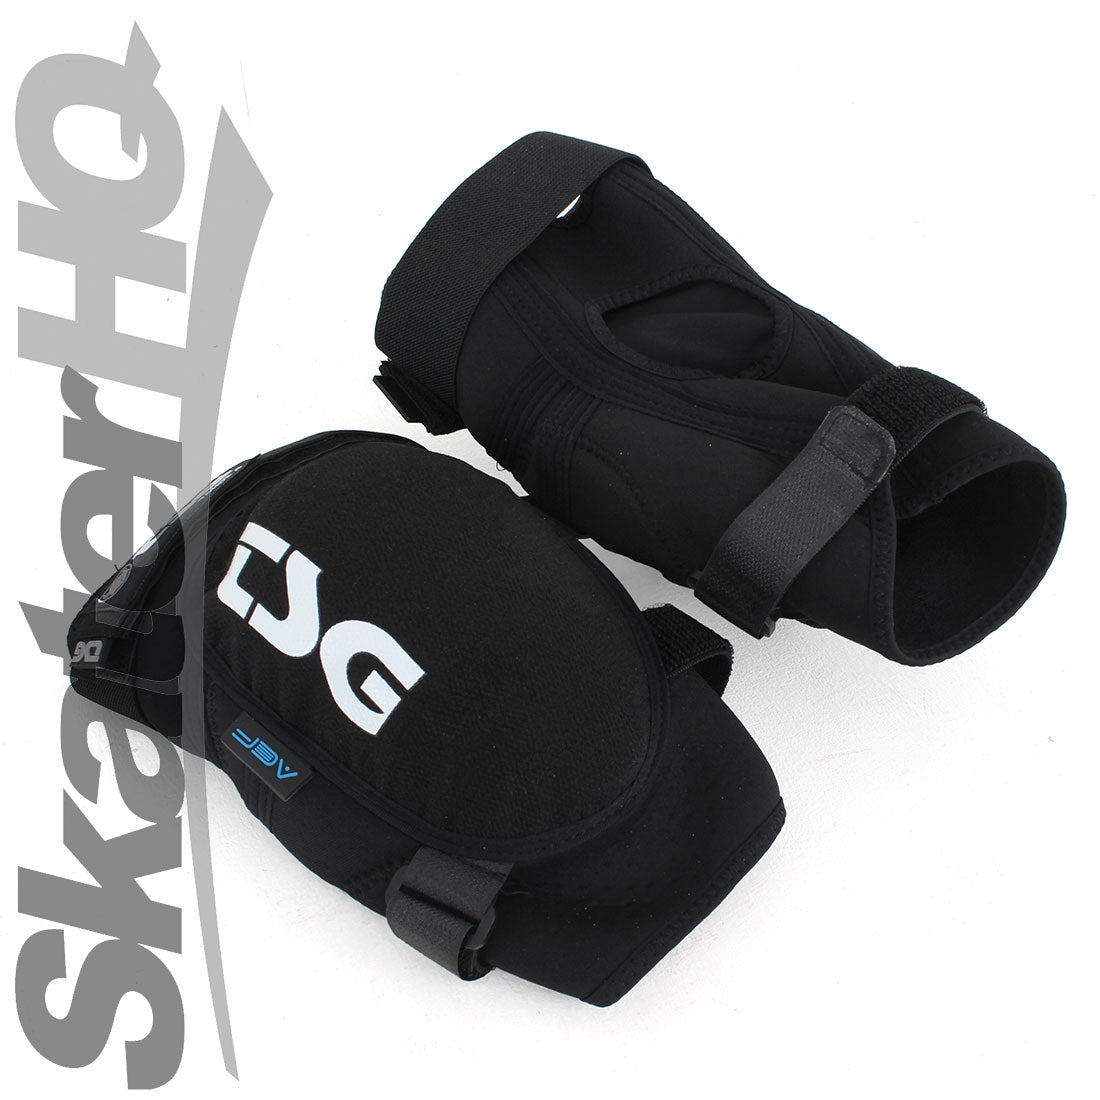 TSG Tahoe Arti-Lage Kneeguard Black - XLarge Protective Gear